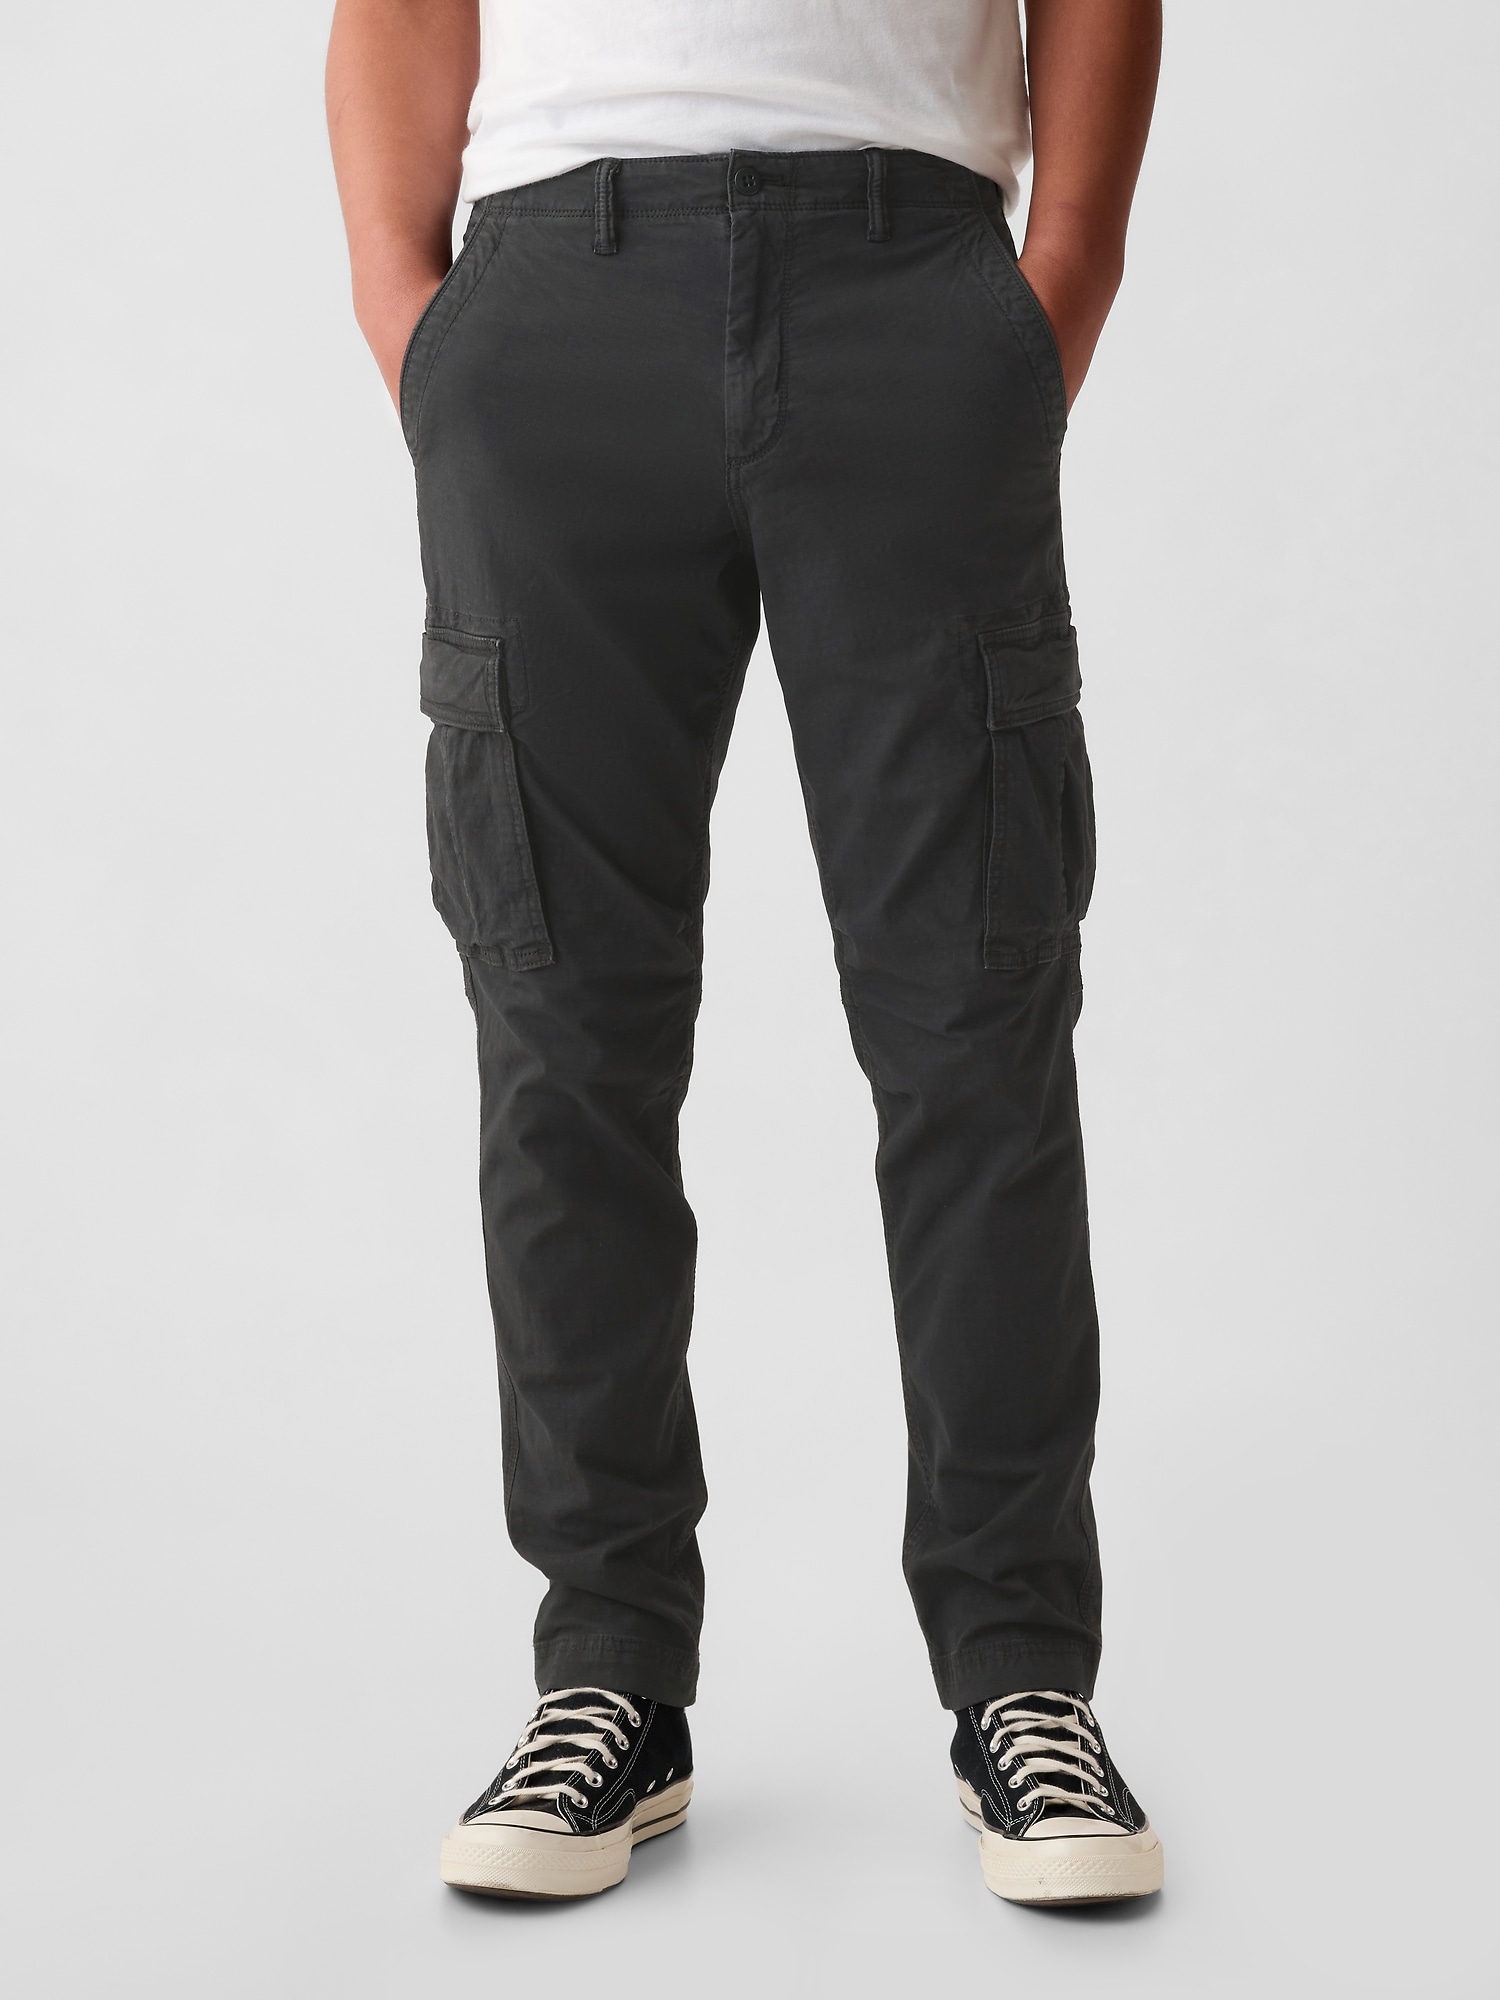 NEW Gap Athletic Men's GapFlex Stretch Waistband Black Pant Size 34 x 32